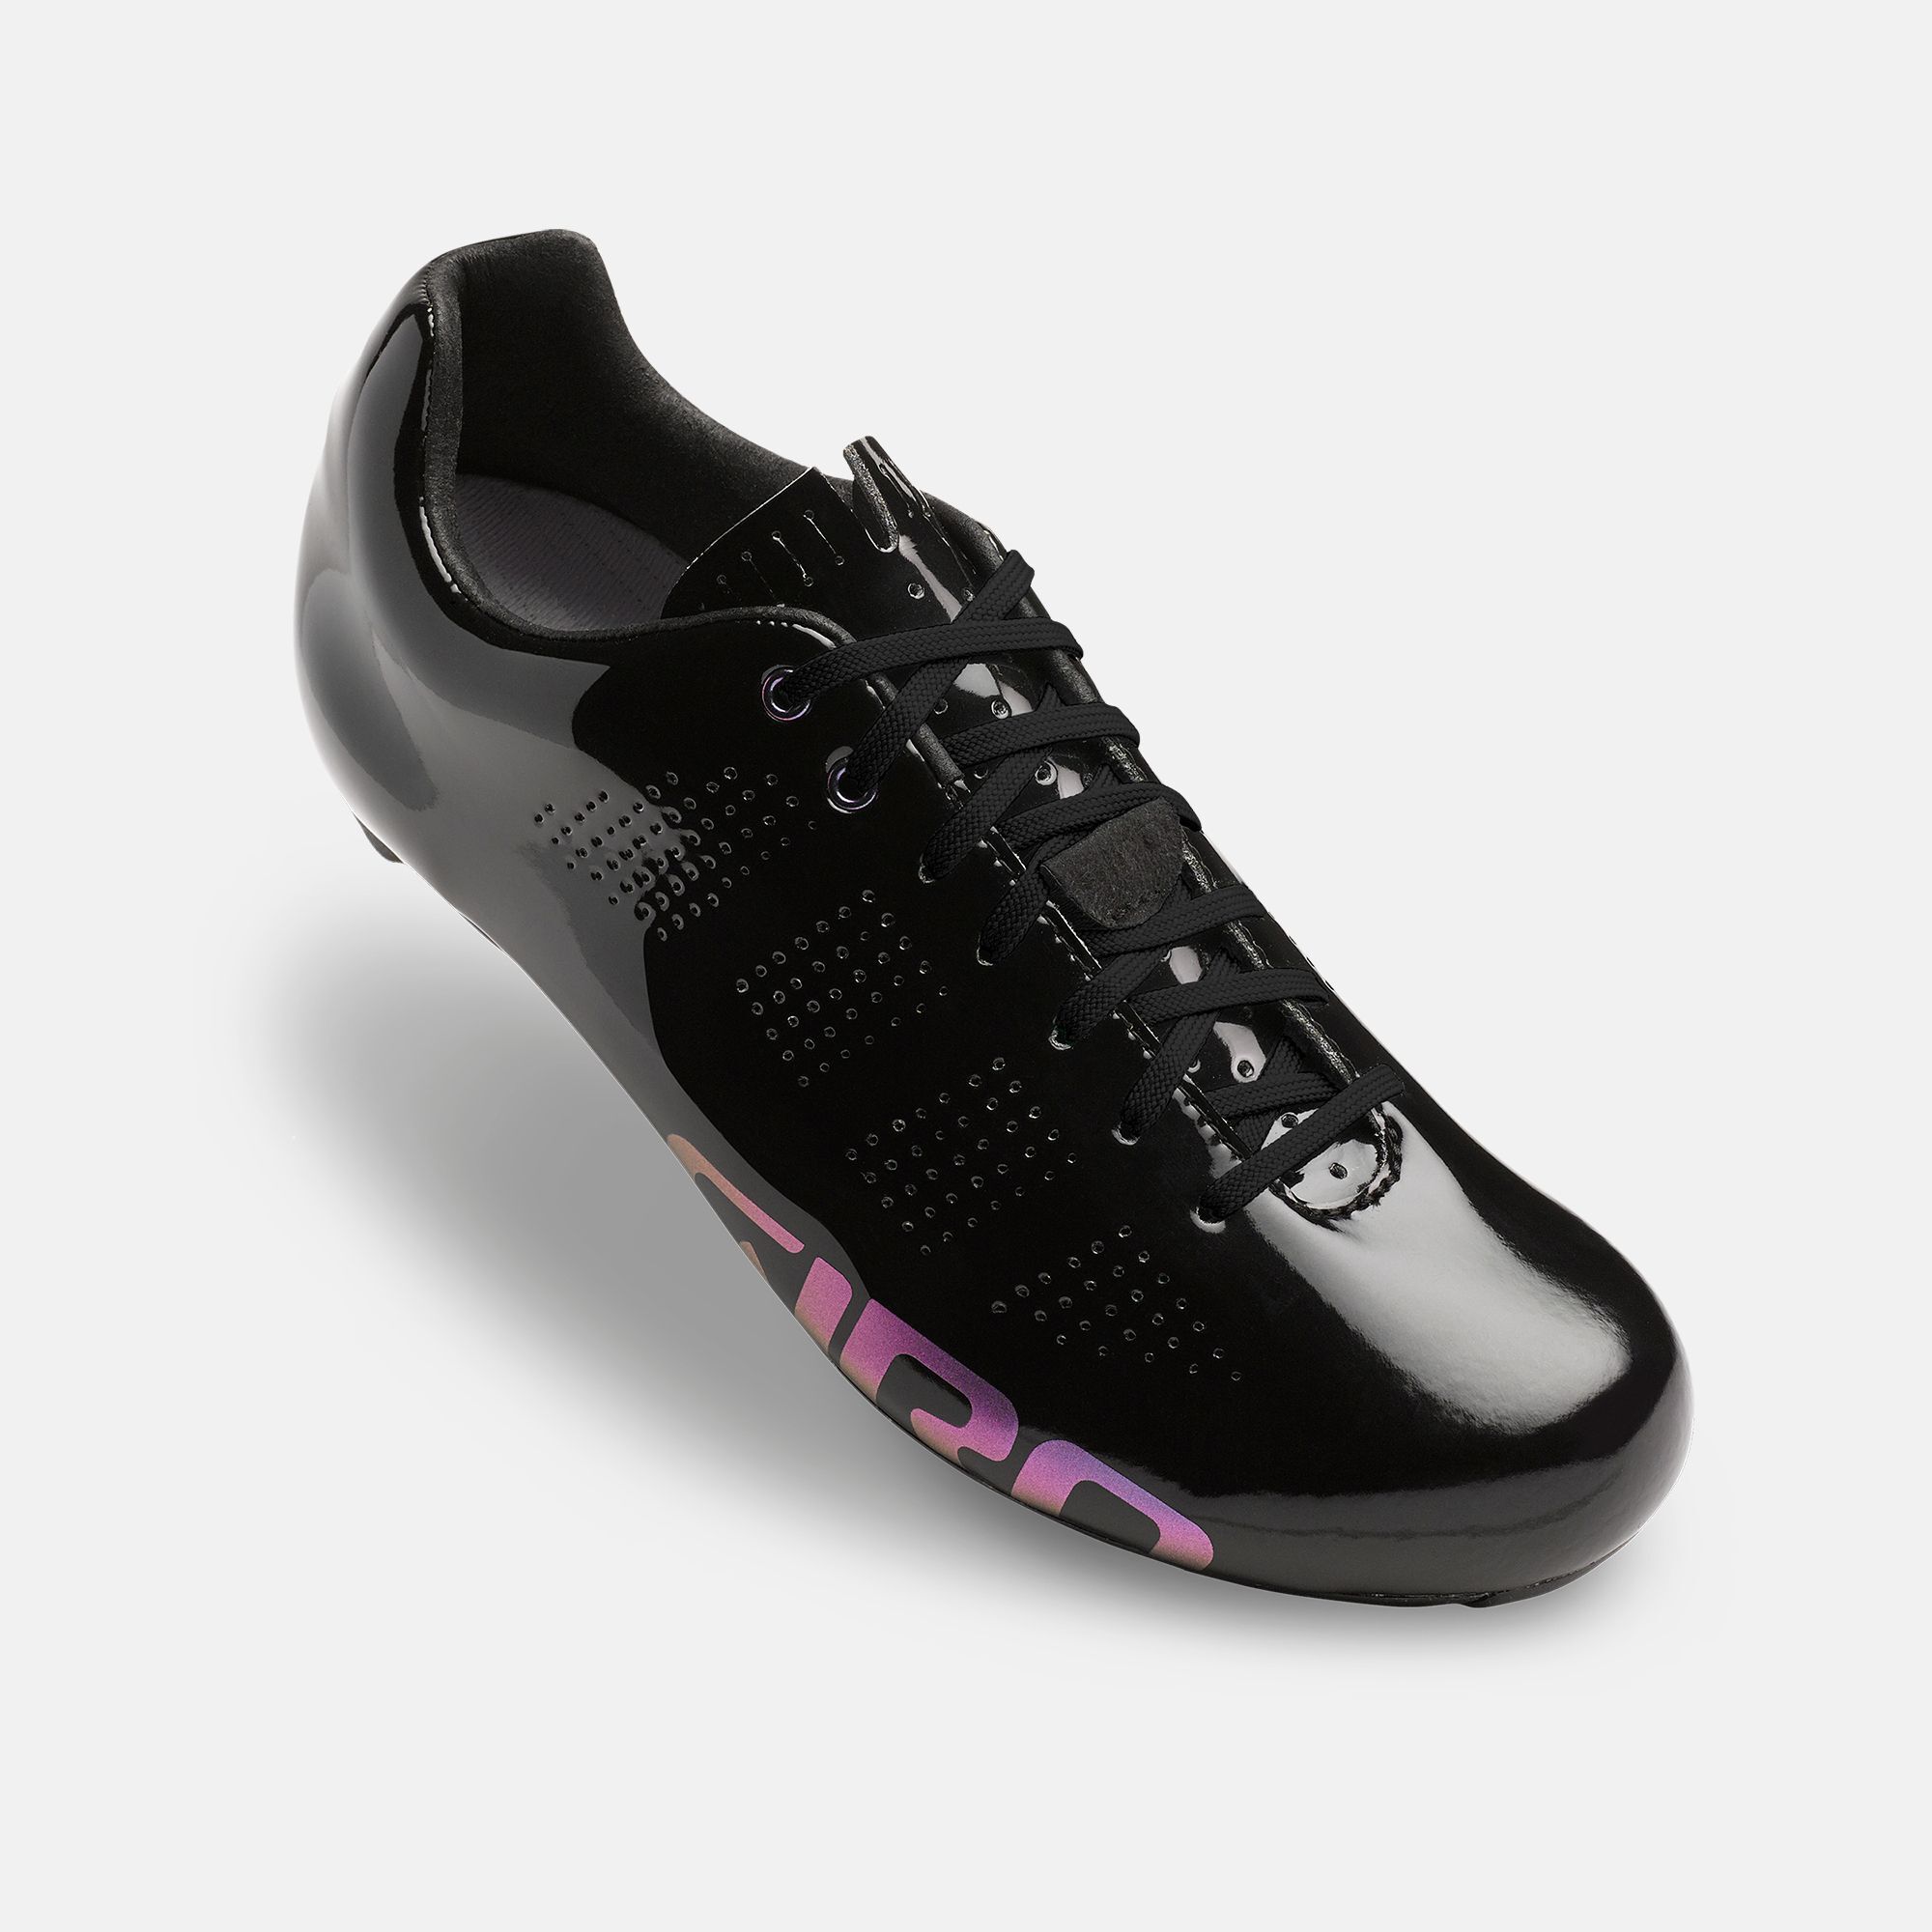 Giro Empire Womens ACC Carbon Road Cycling Shoes Black Size 40.5 EU 8.5 US New 